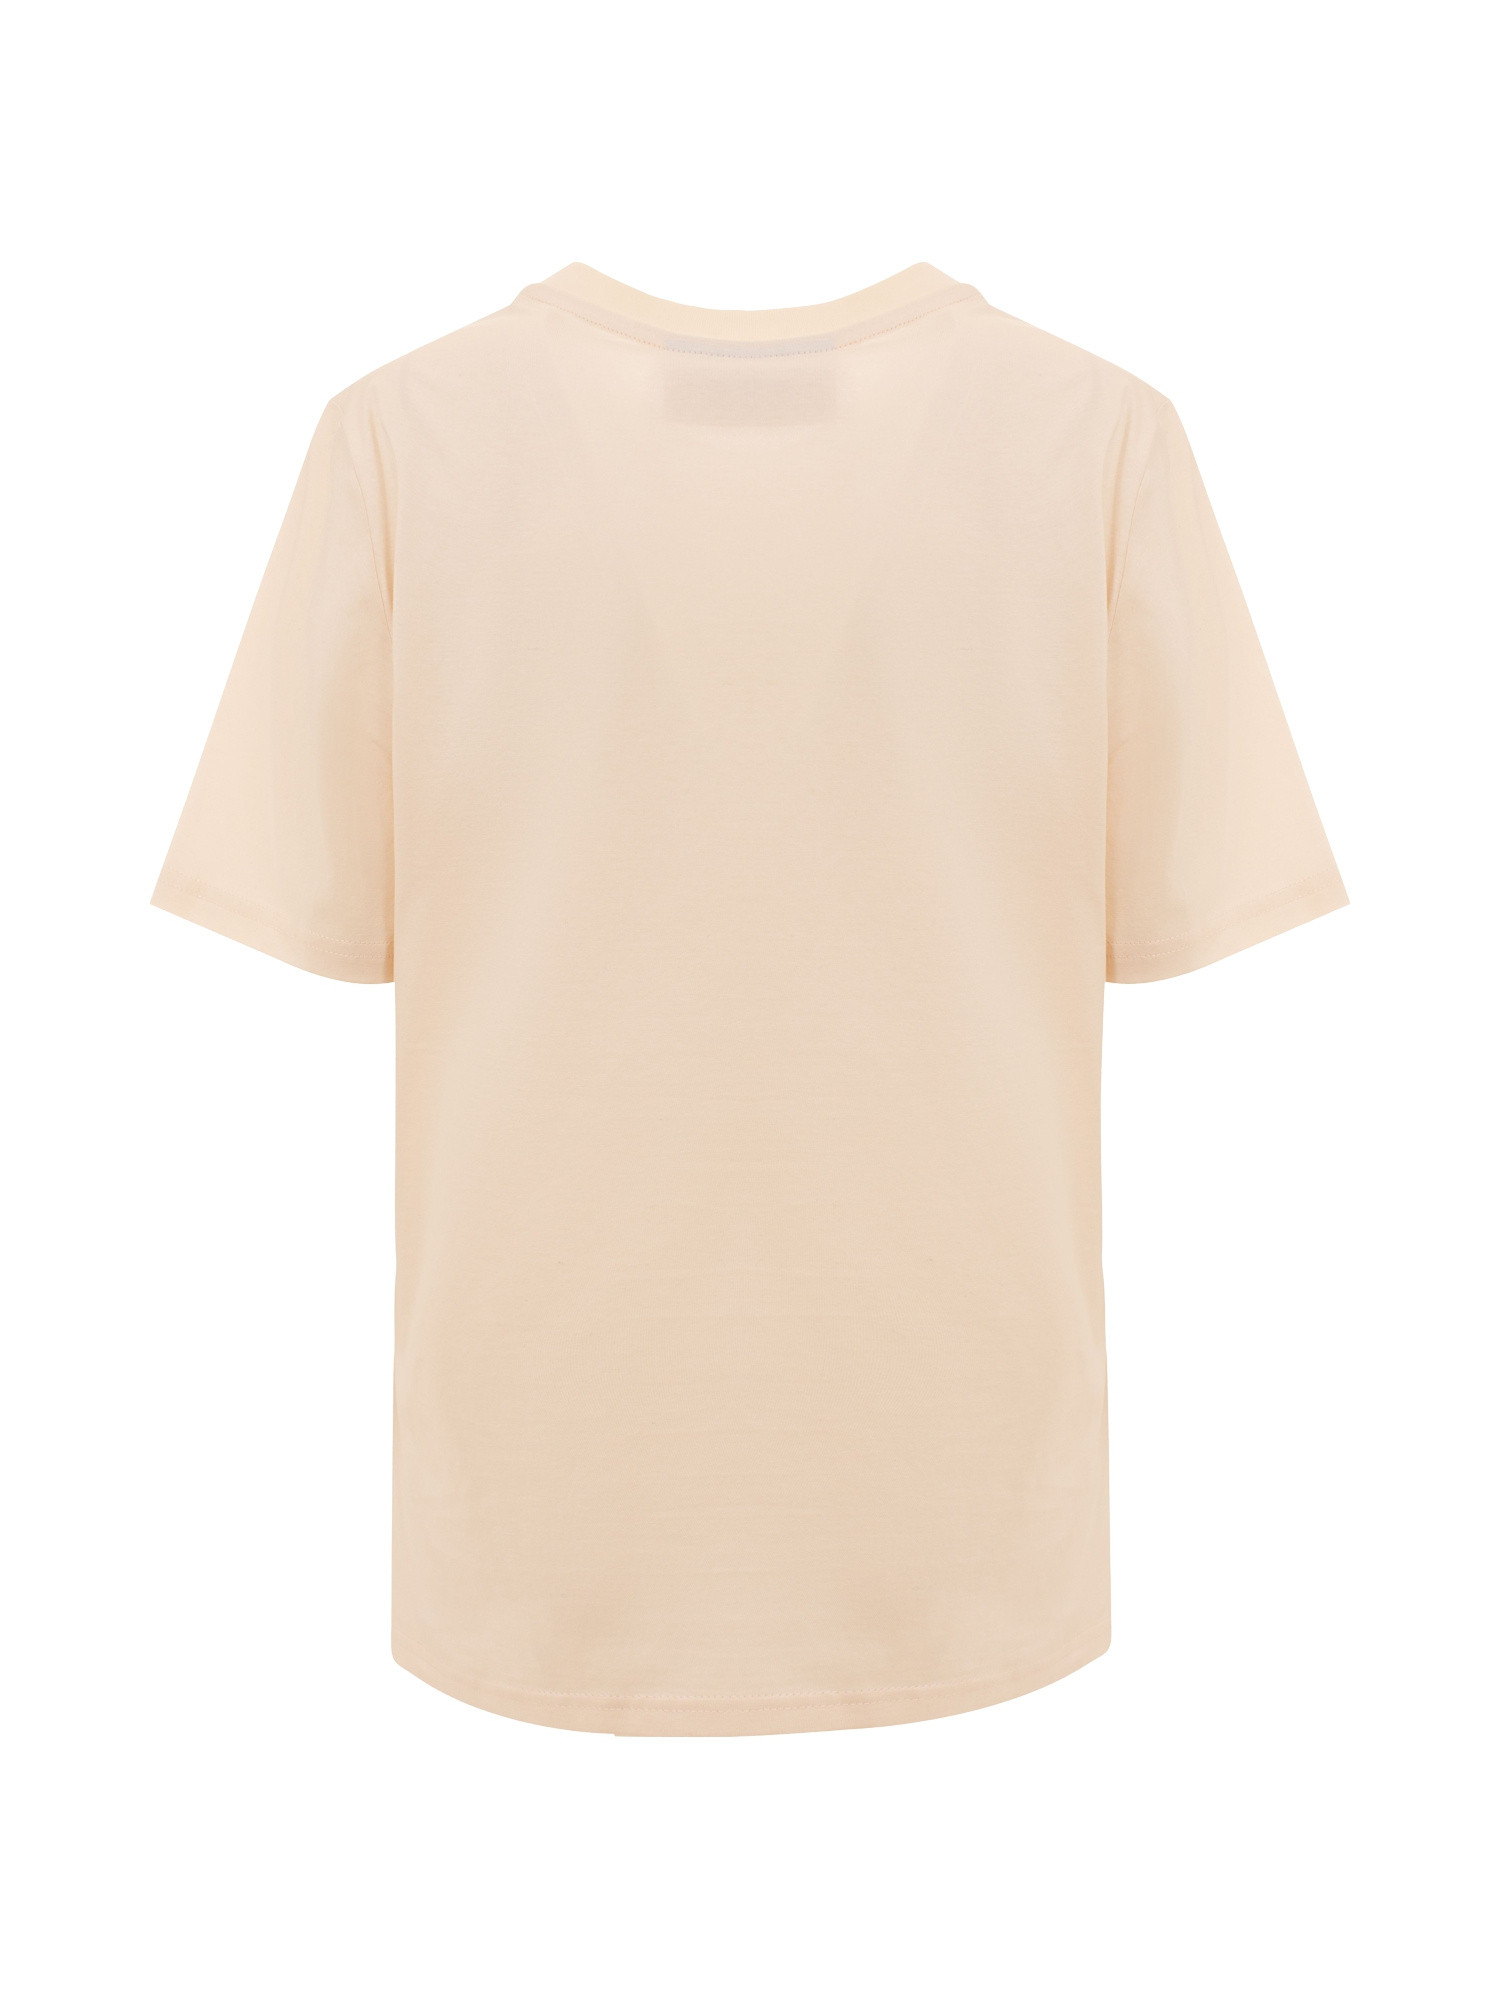 Chiara Ferragni - Regular fit T-shirt with tennis print, Light Pink, large image number 1